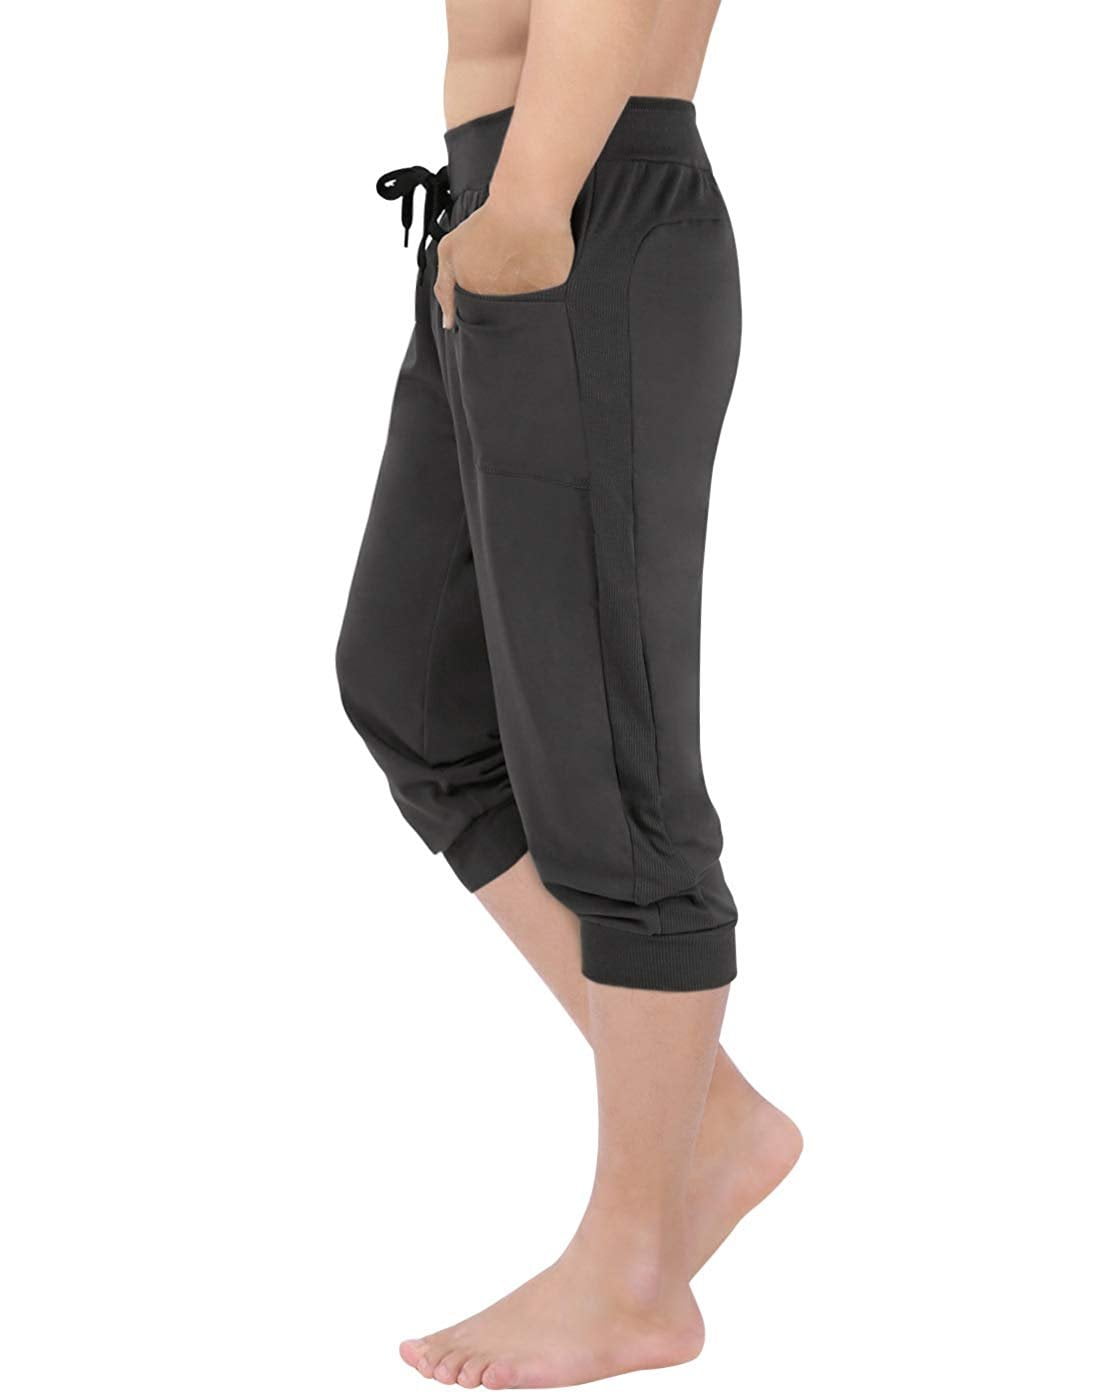 Hixiaohe Mens 3/4 Cotton Jogger Capri Shorts Sweatpants Workout Pants with Zipper Pockets